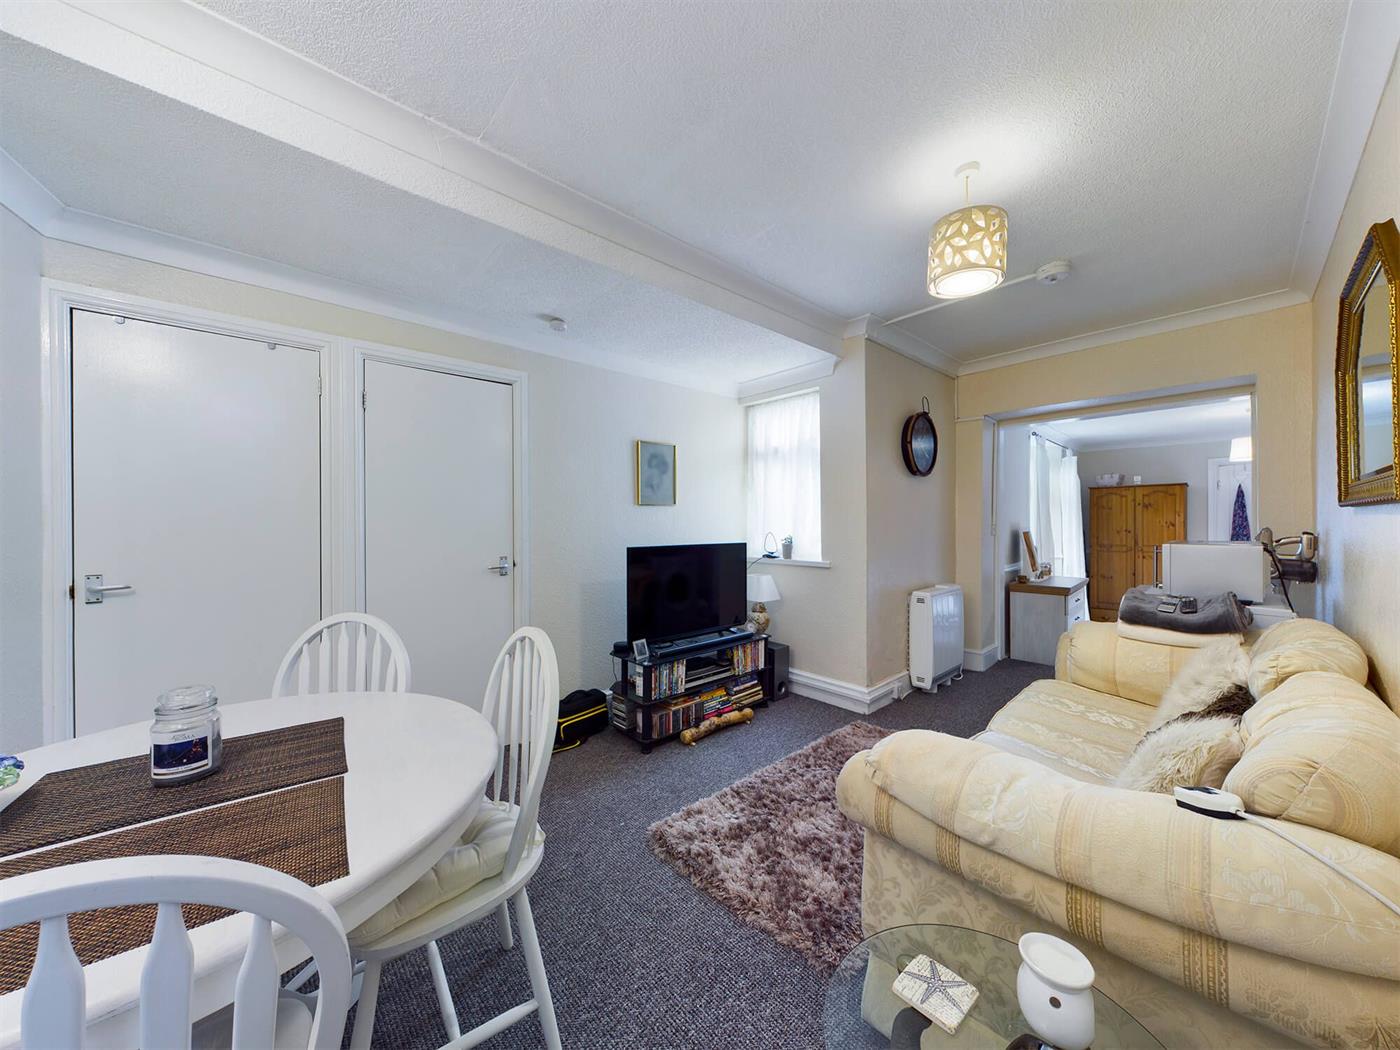 1 Bedroom Flat to Rent (Let): Cleveland Road, Torquay, TQ2 5BD